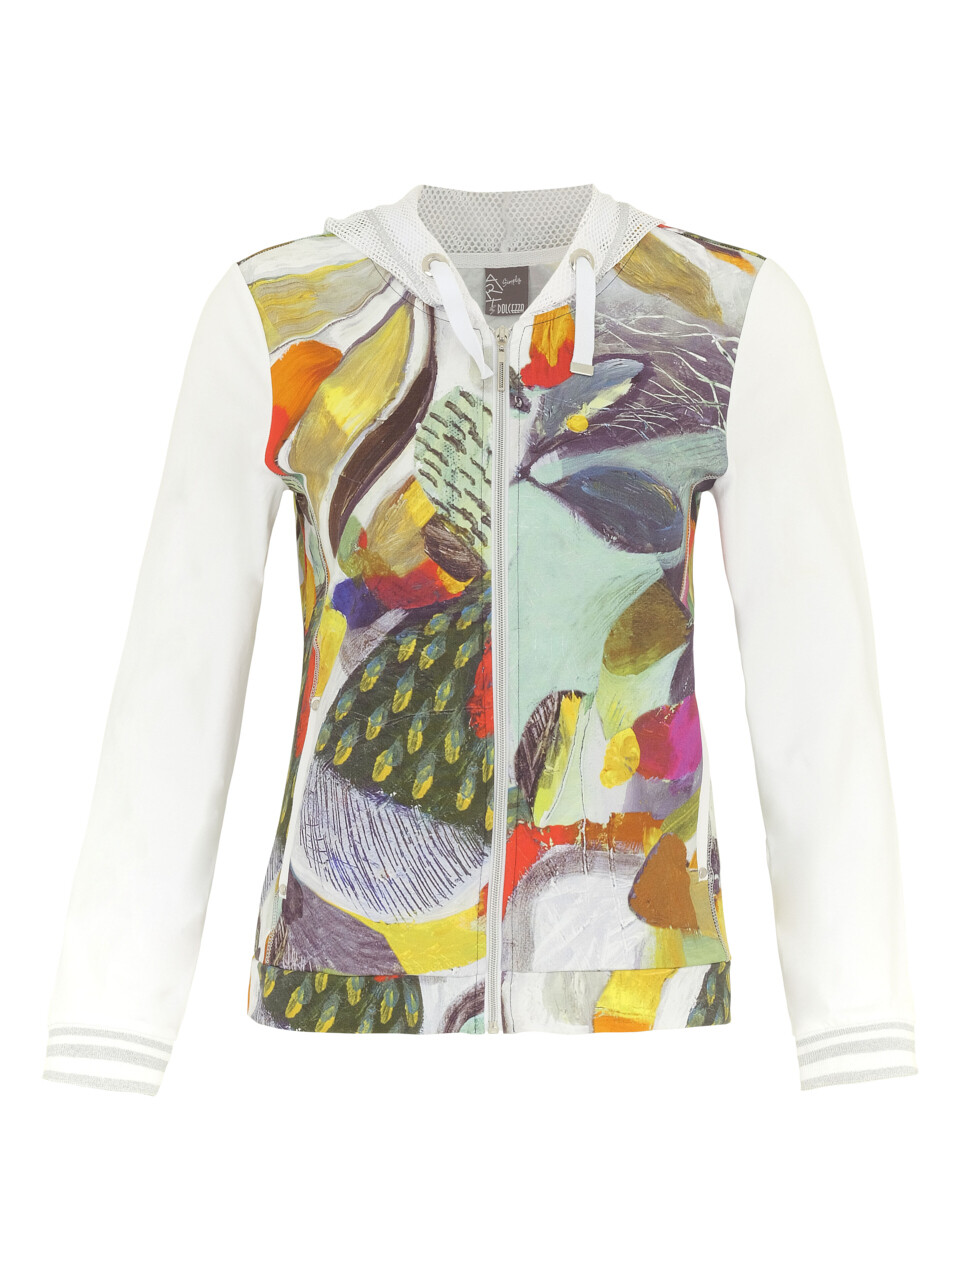 Simply Art Dolcezza: Botanica Abstract Art Hoodie Zip Jacket